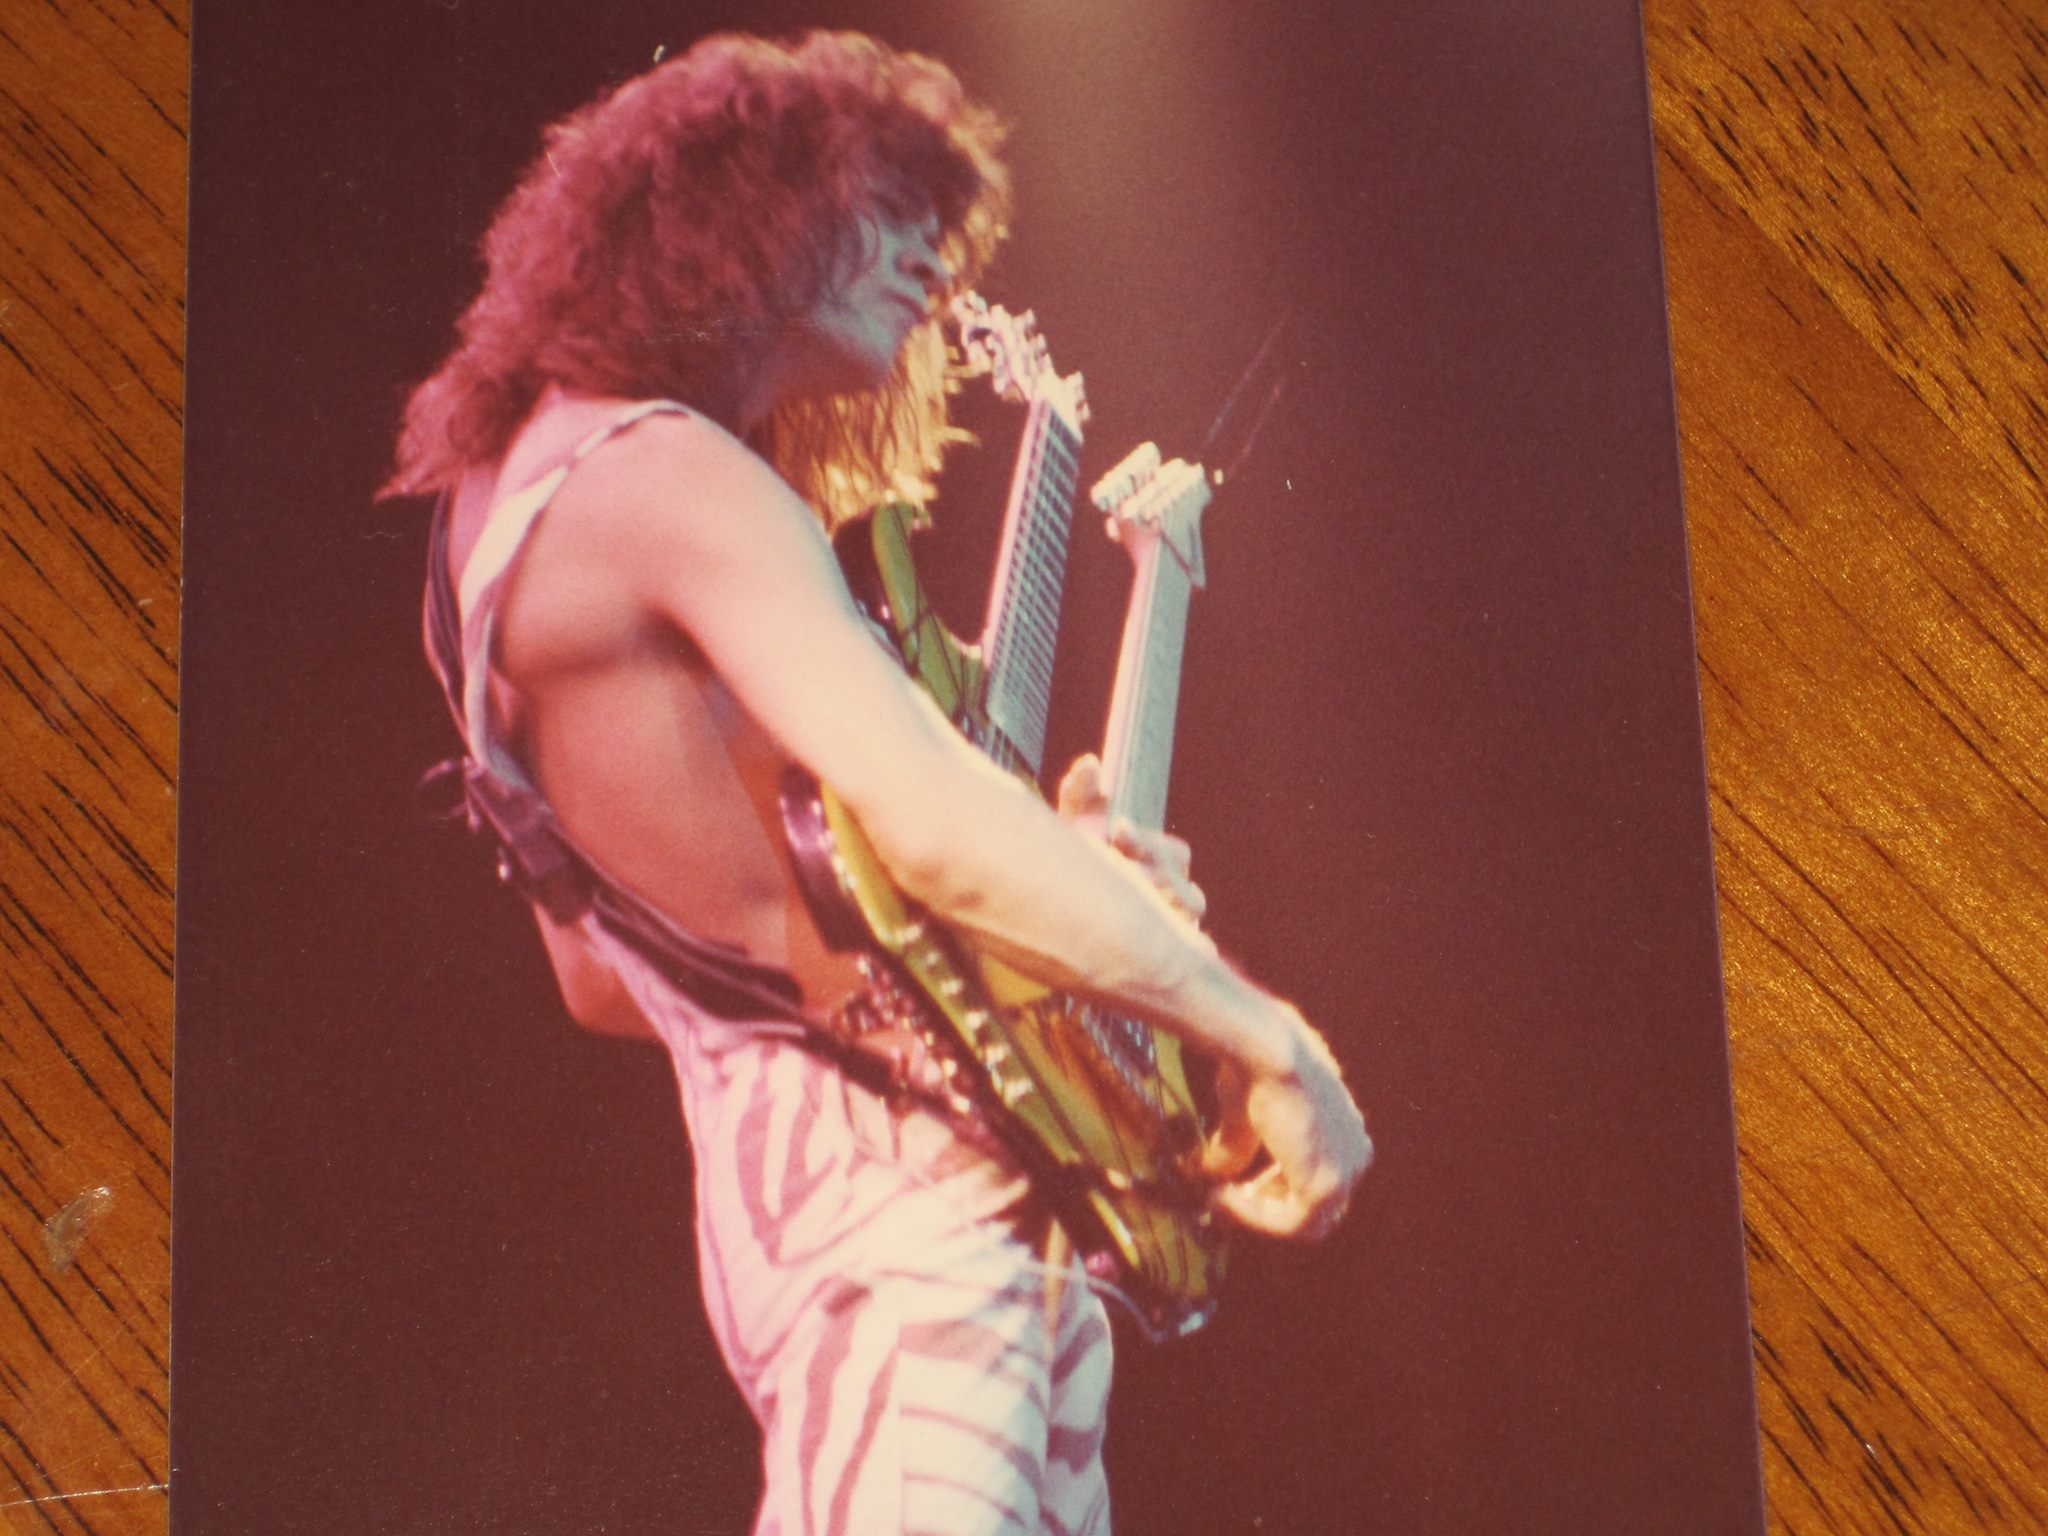 Van Halen Live Bootleg - 11/18/1982 - Dallas, TX @ Reunion Arena